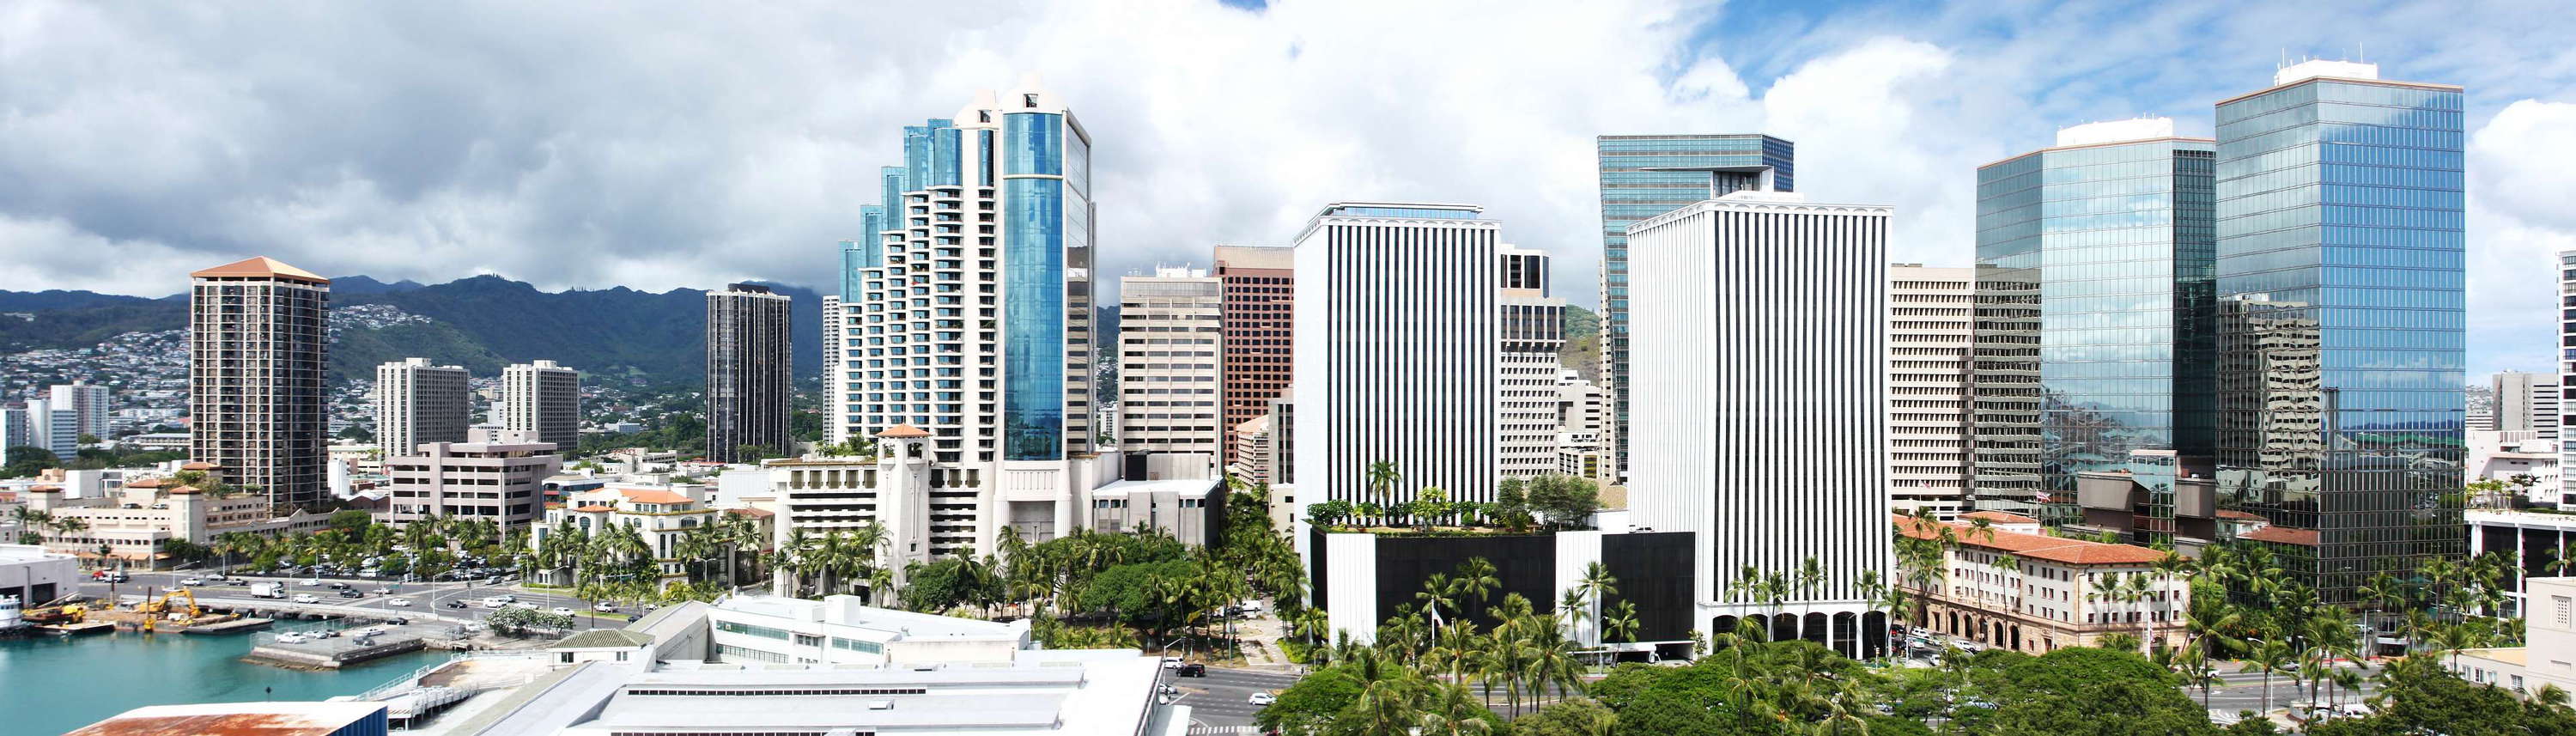 Honolulu  |  CBD panorama